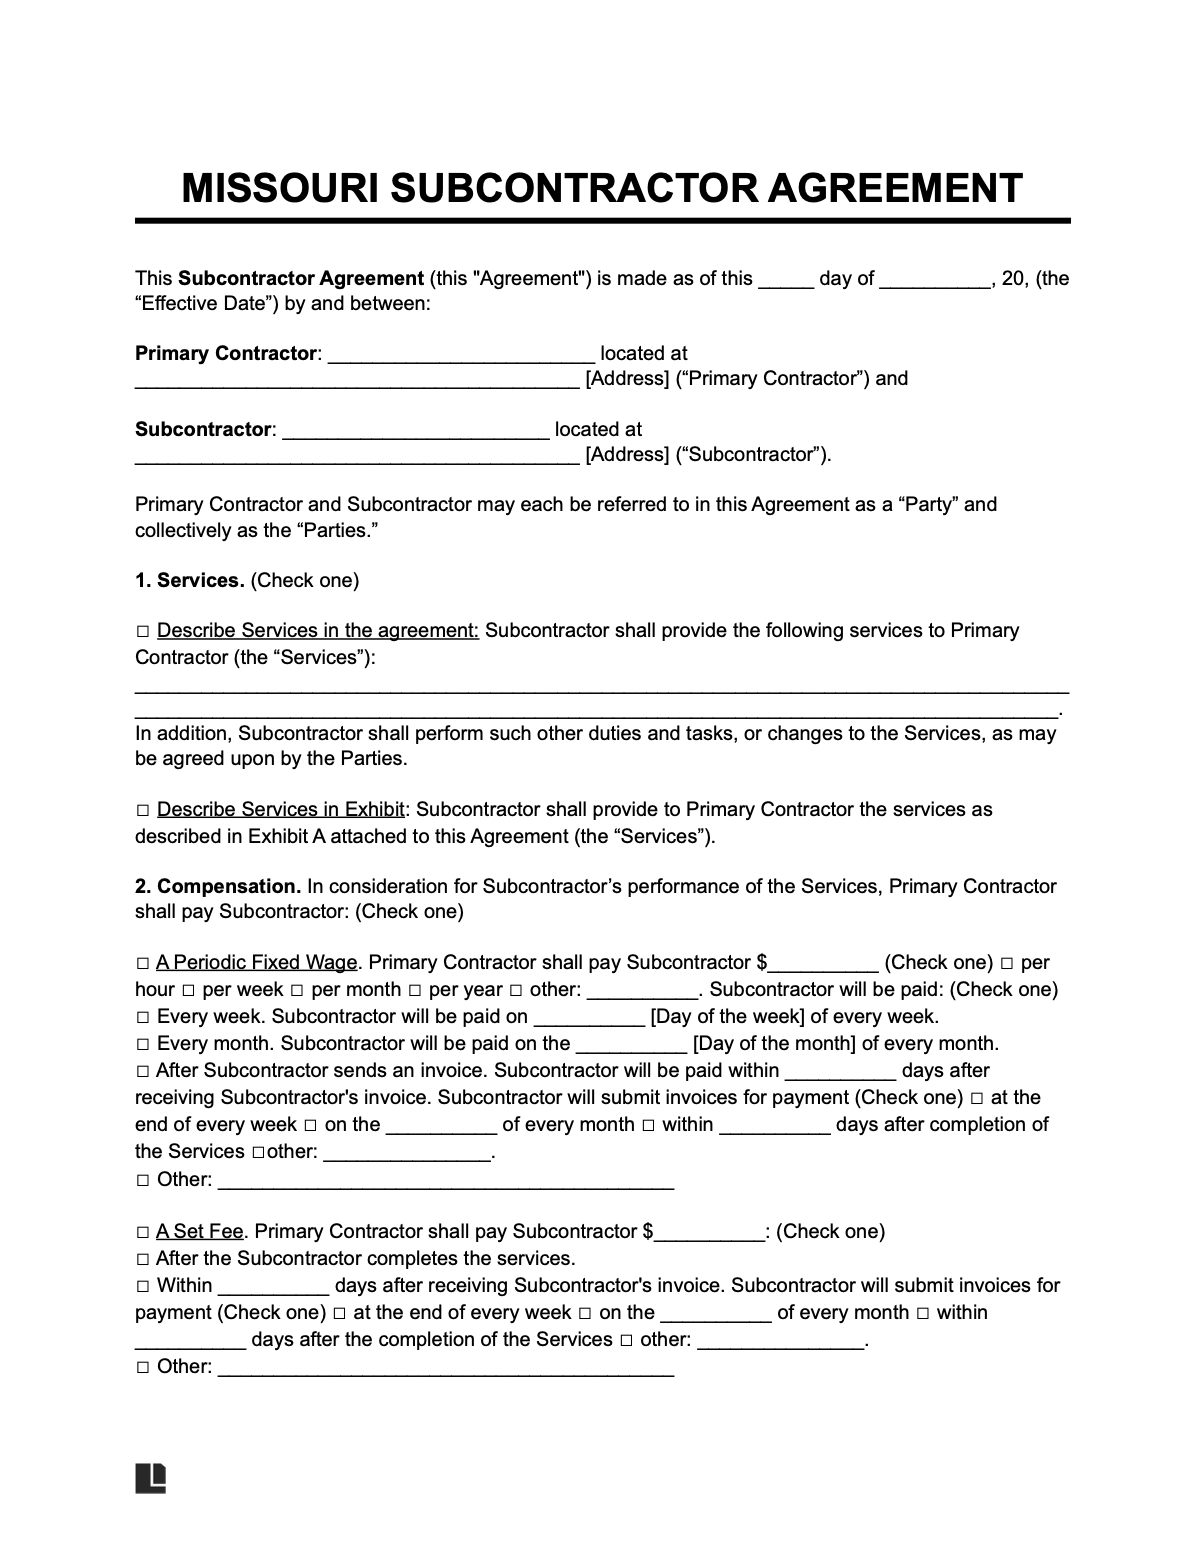 missouri subcontractor agreement template